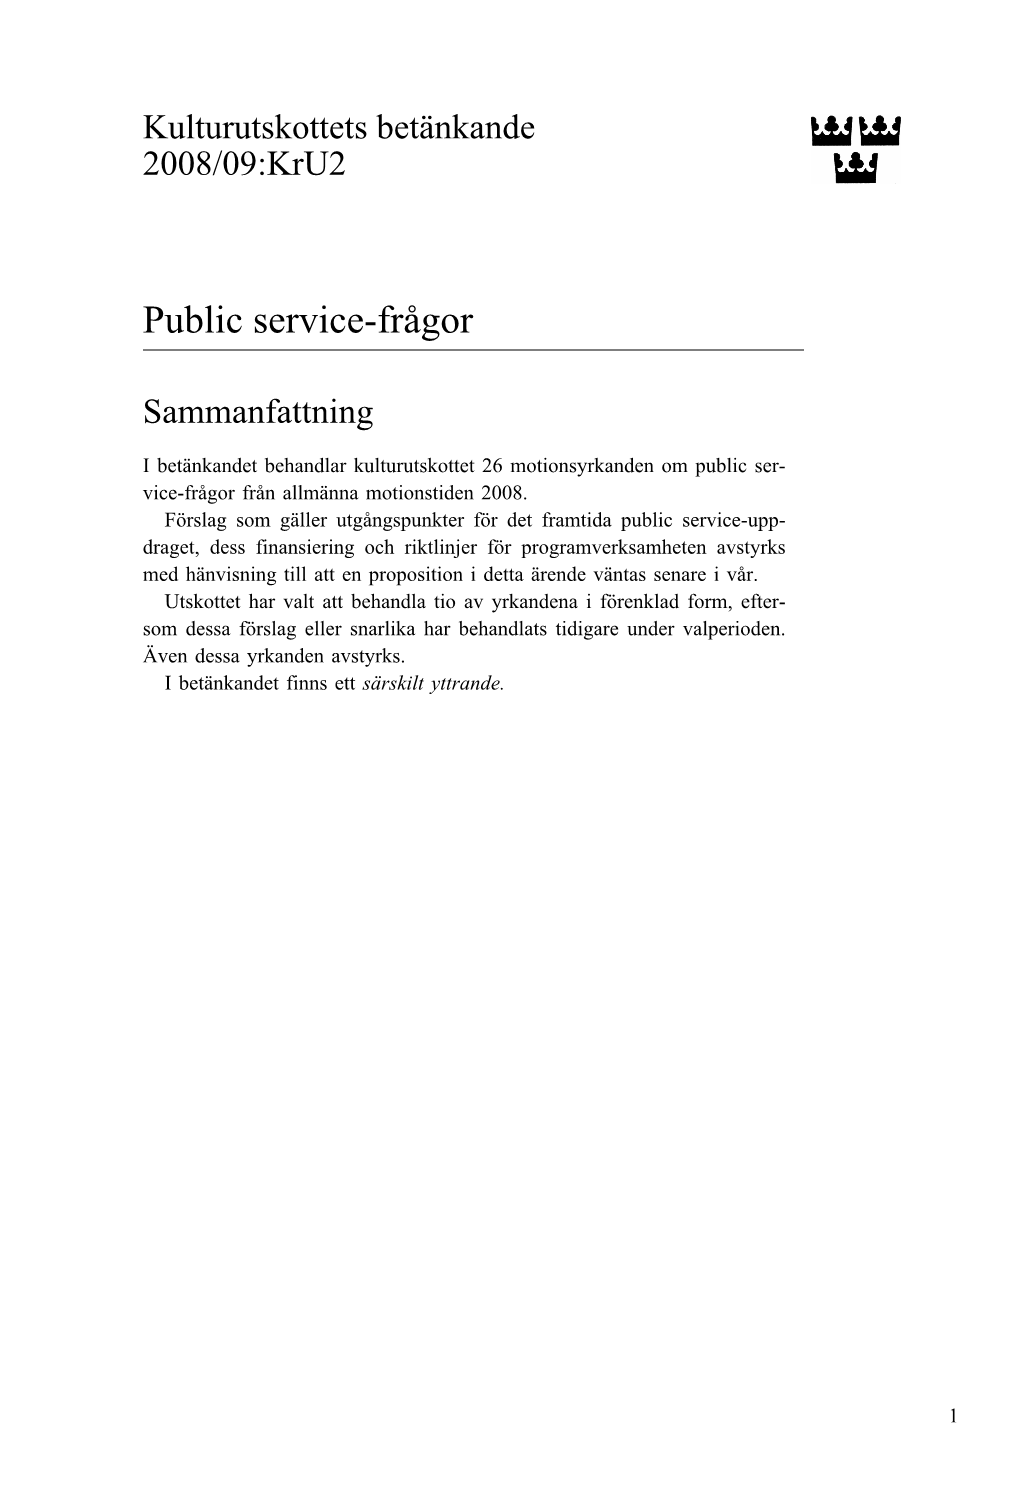 Public Service-Frågor